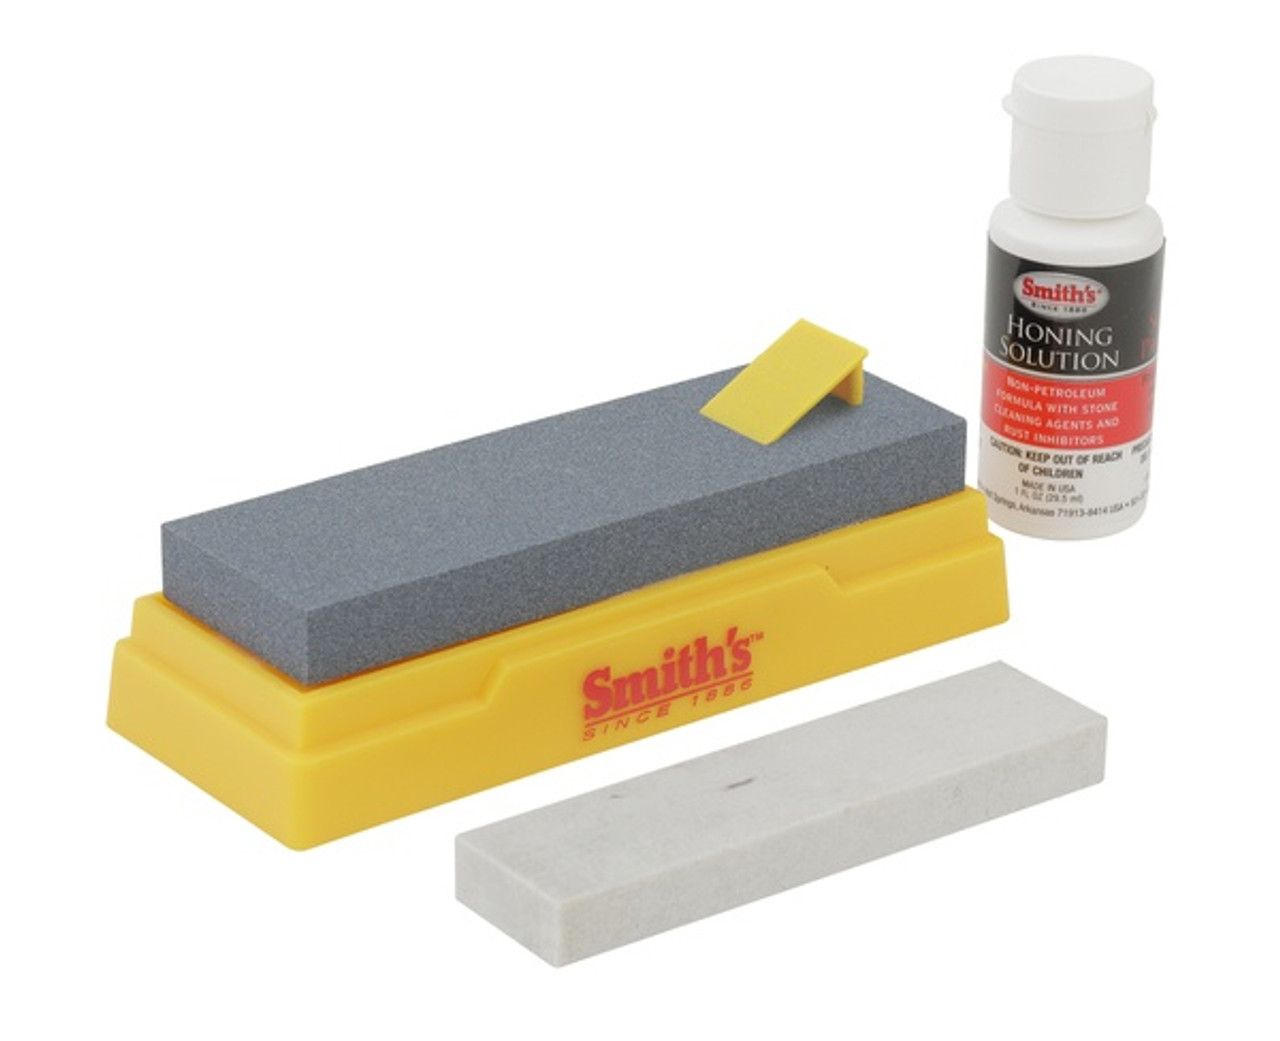 Smith's 2-Stone Sharpening Kit